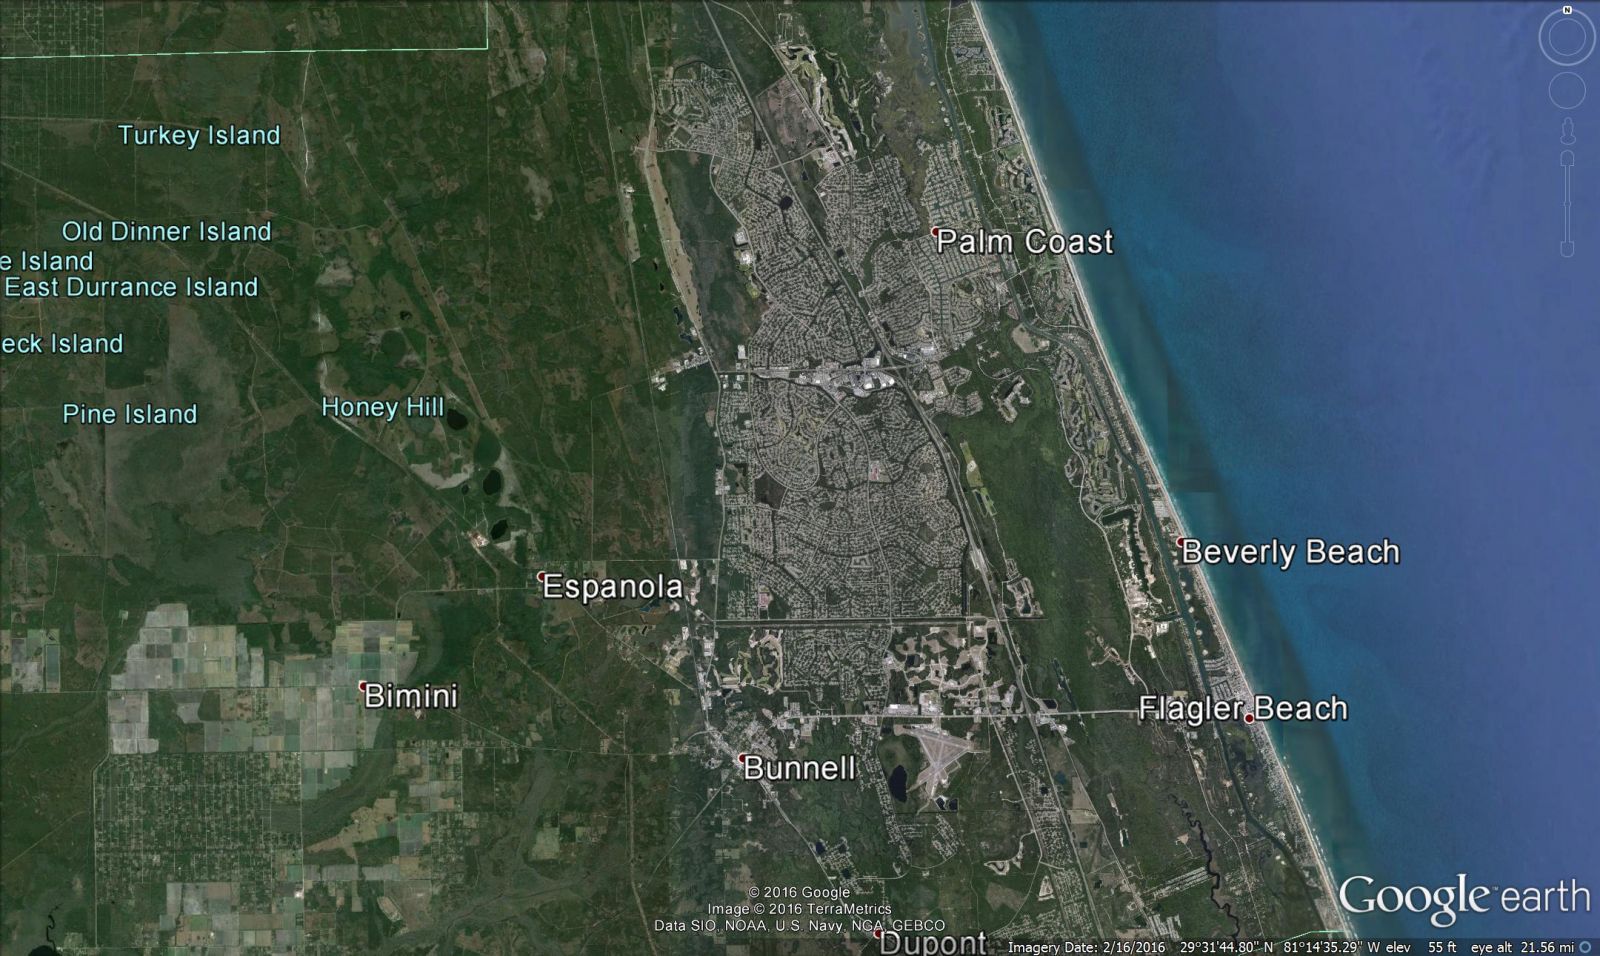 Palm Coast, FL - February 2016 - Google Earth